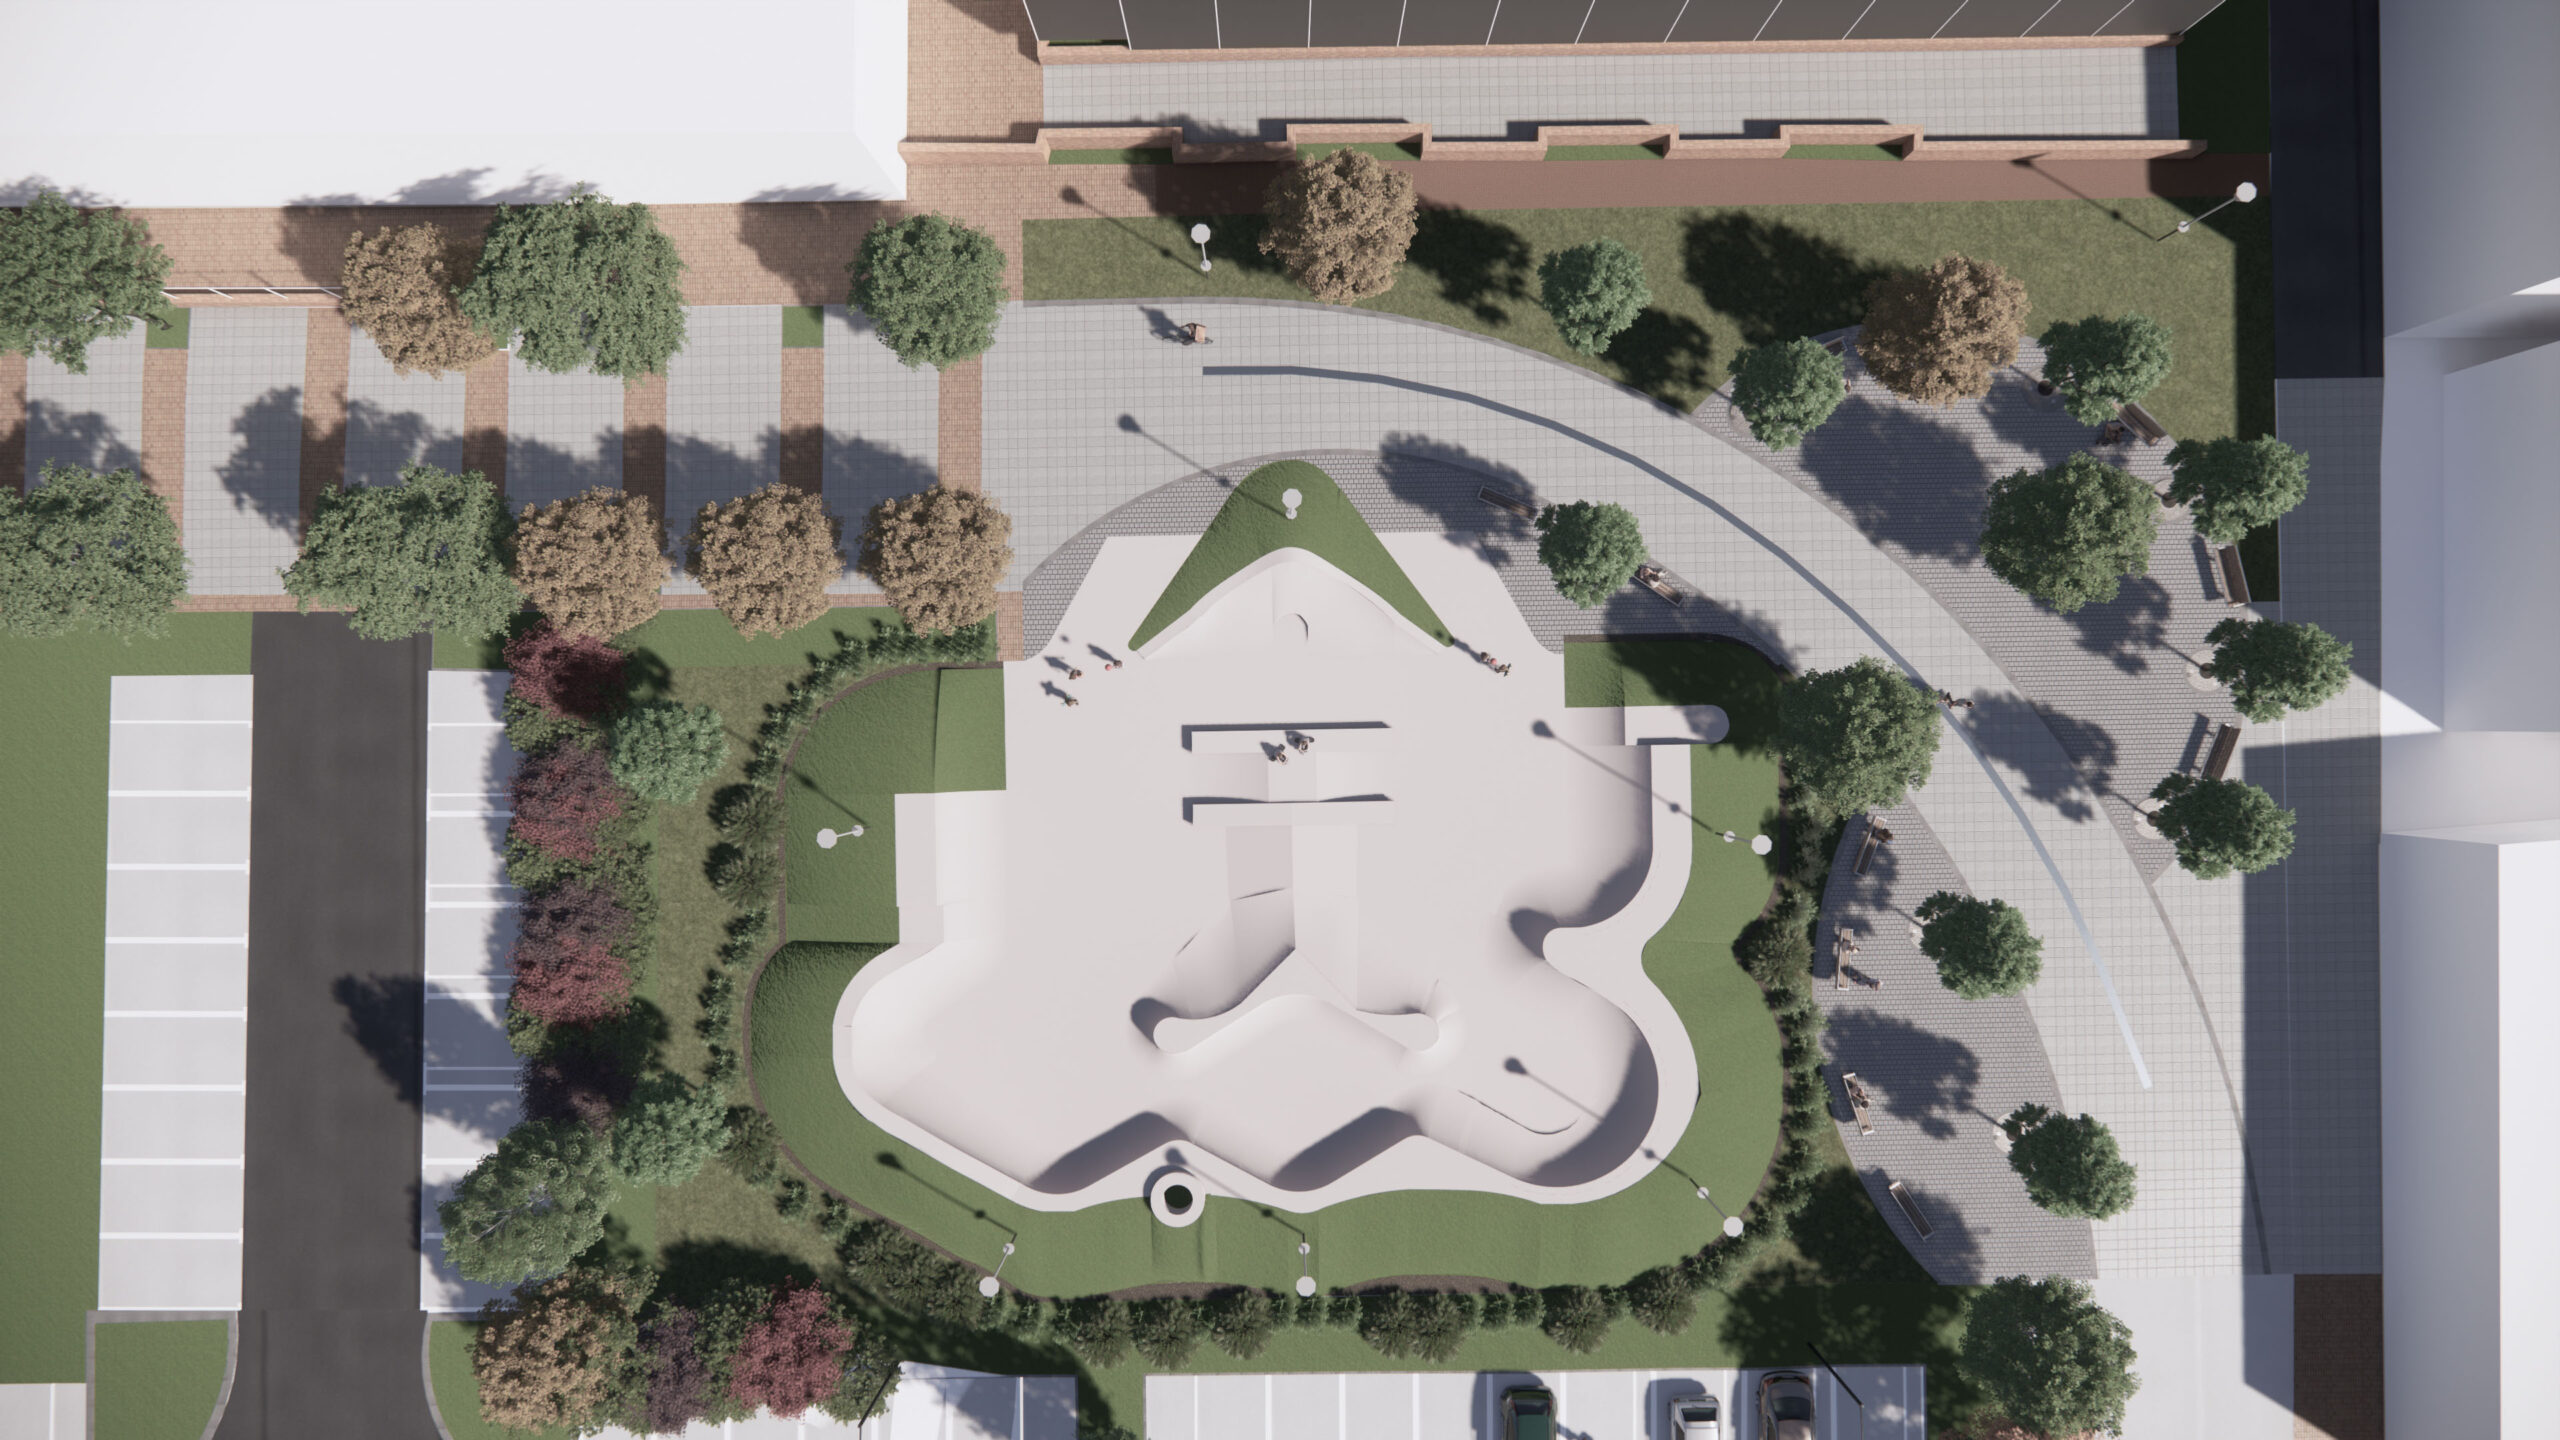 New skate park in Merthyr Tydfil unveiled